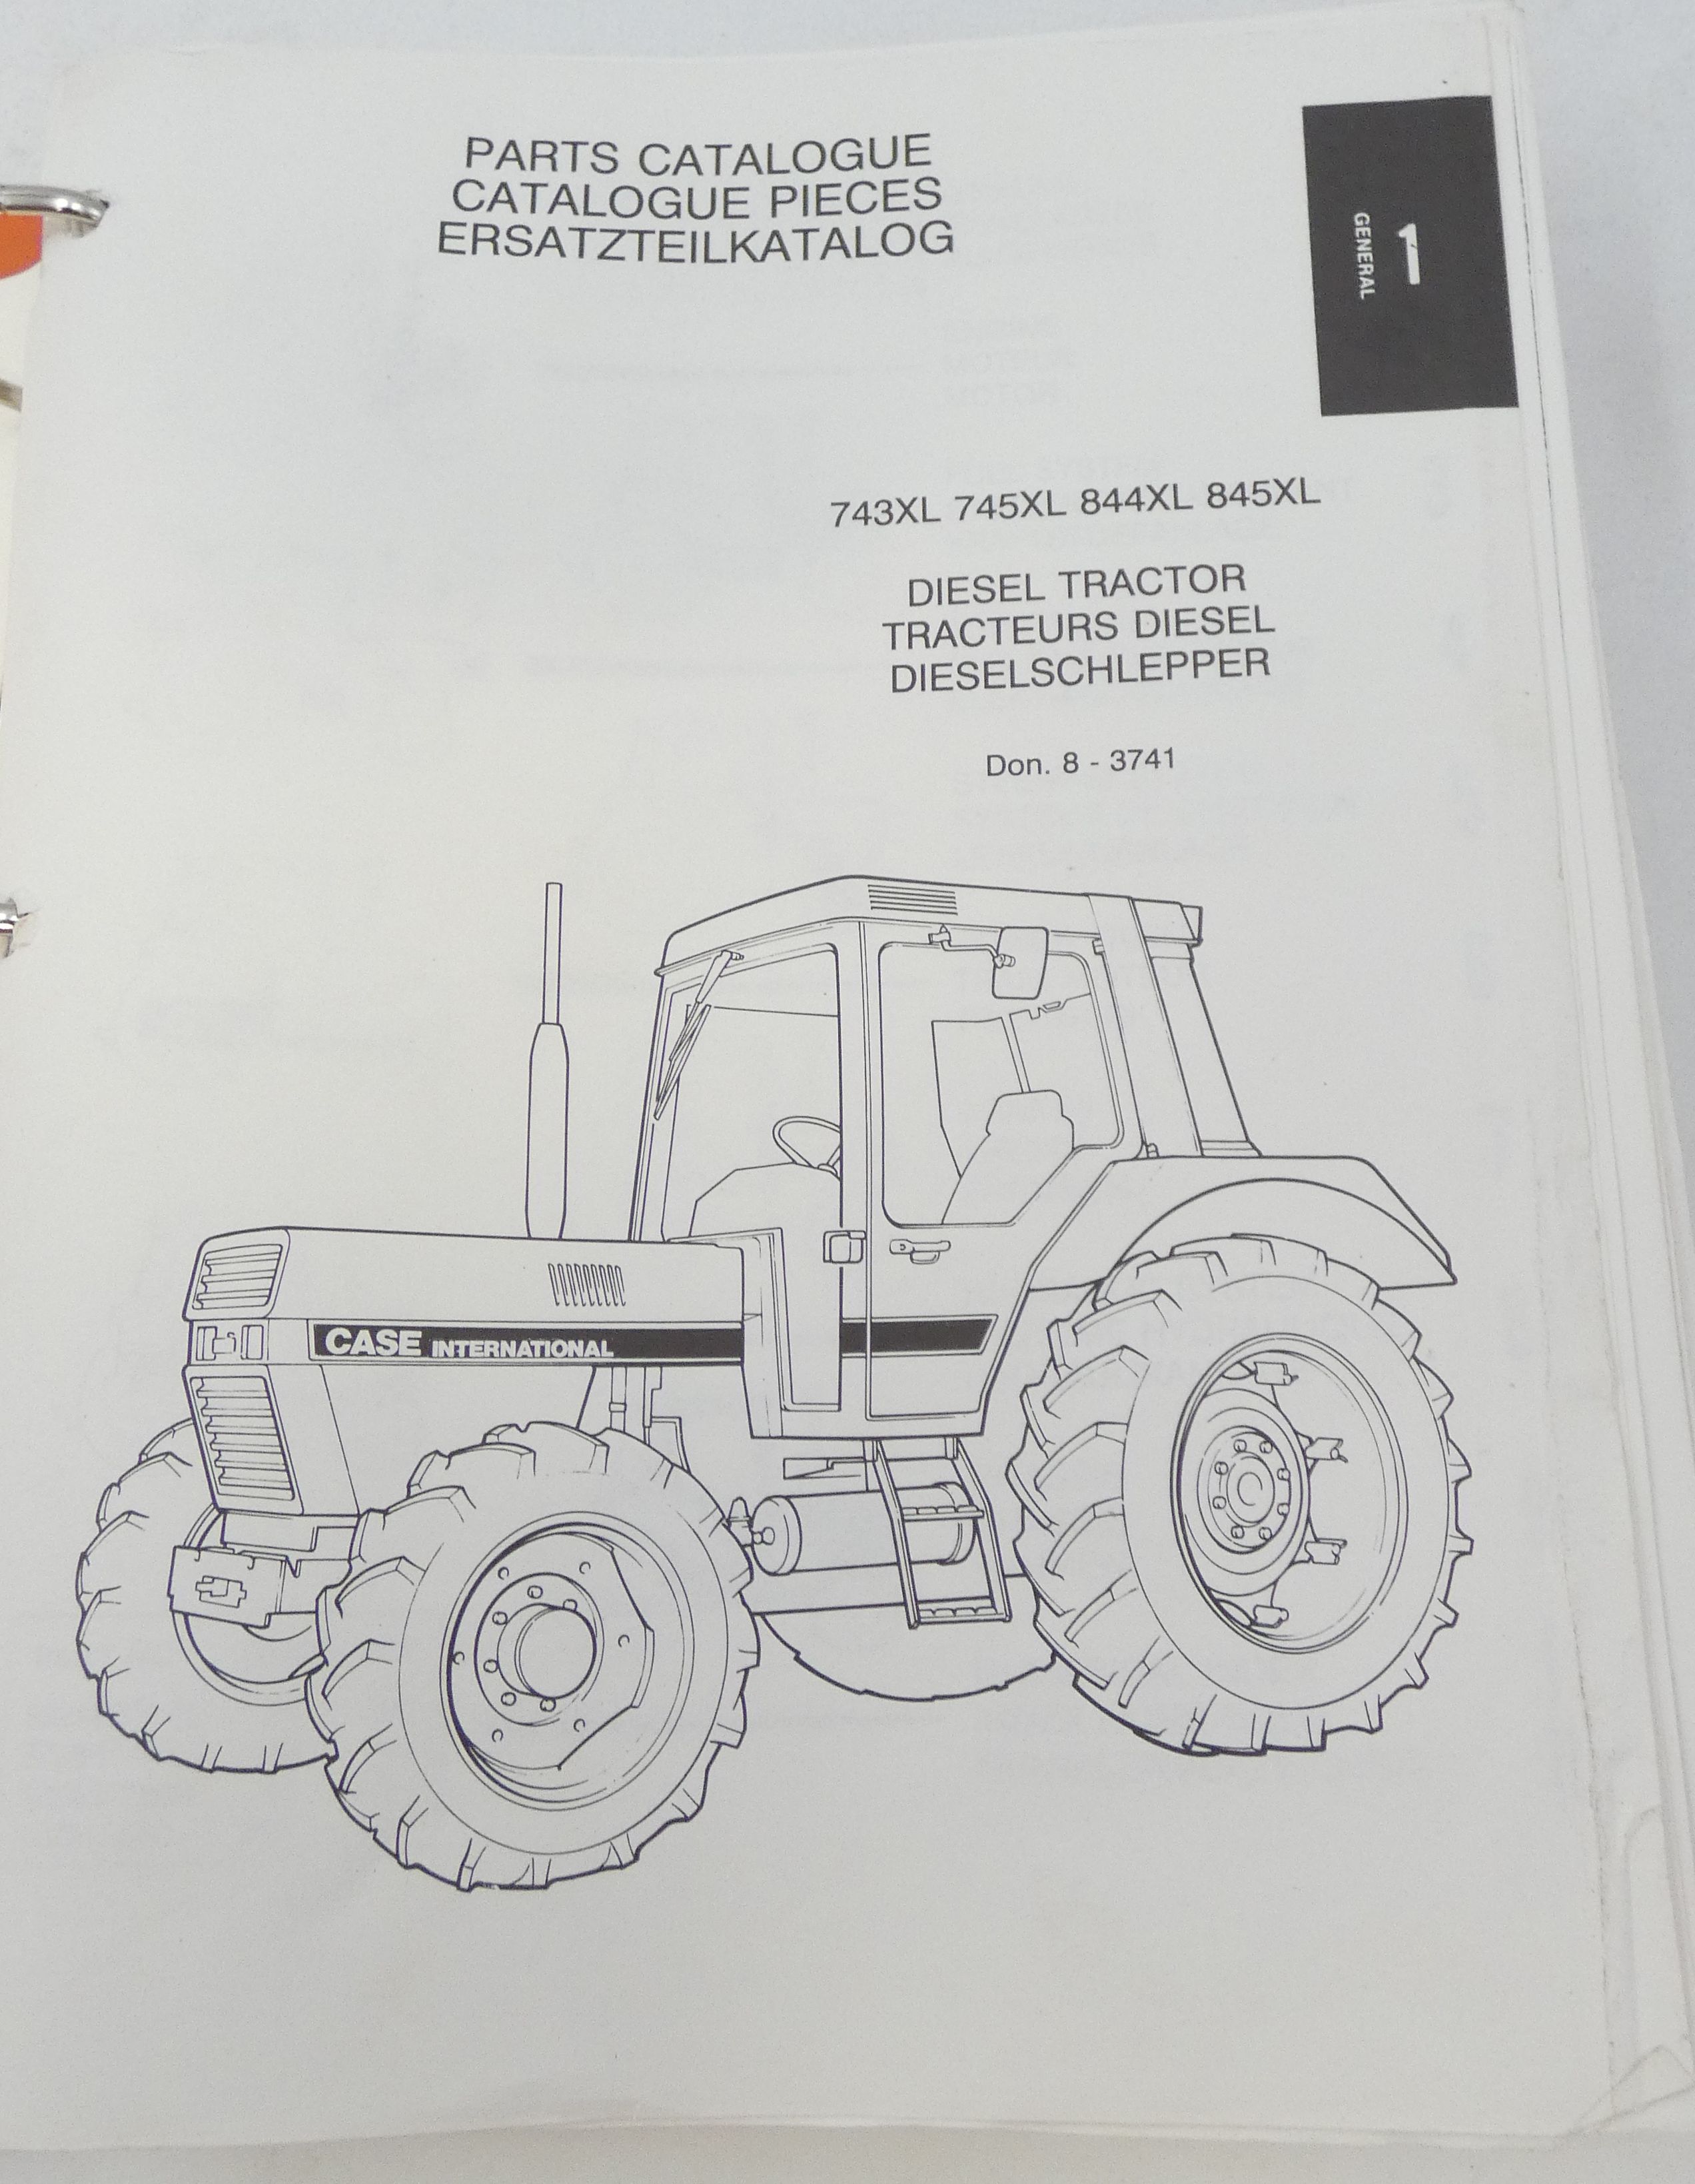 Case International 743XL, 745XL, 844XL, 845XL diesel tractor parts catalogue